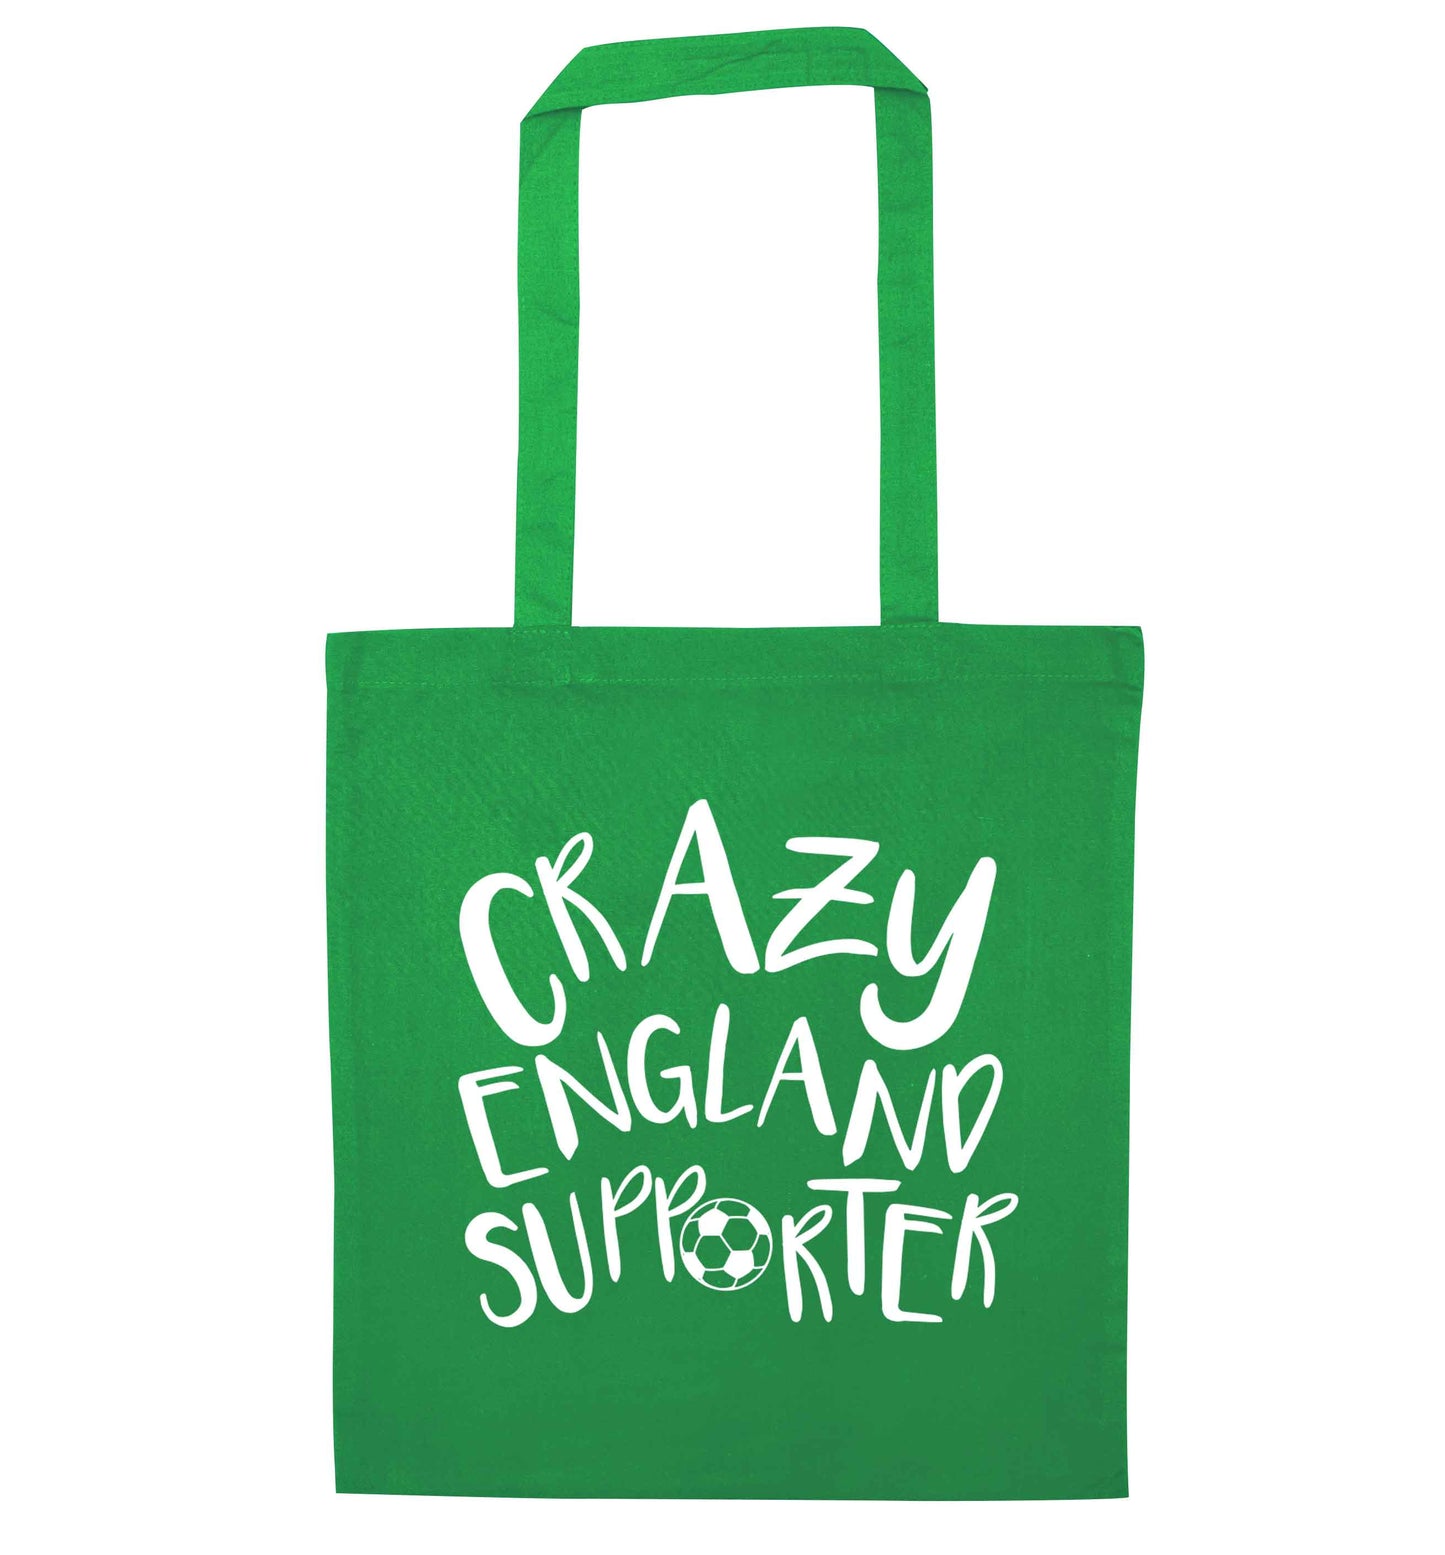 Crazy England supporter green tote bag